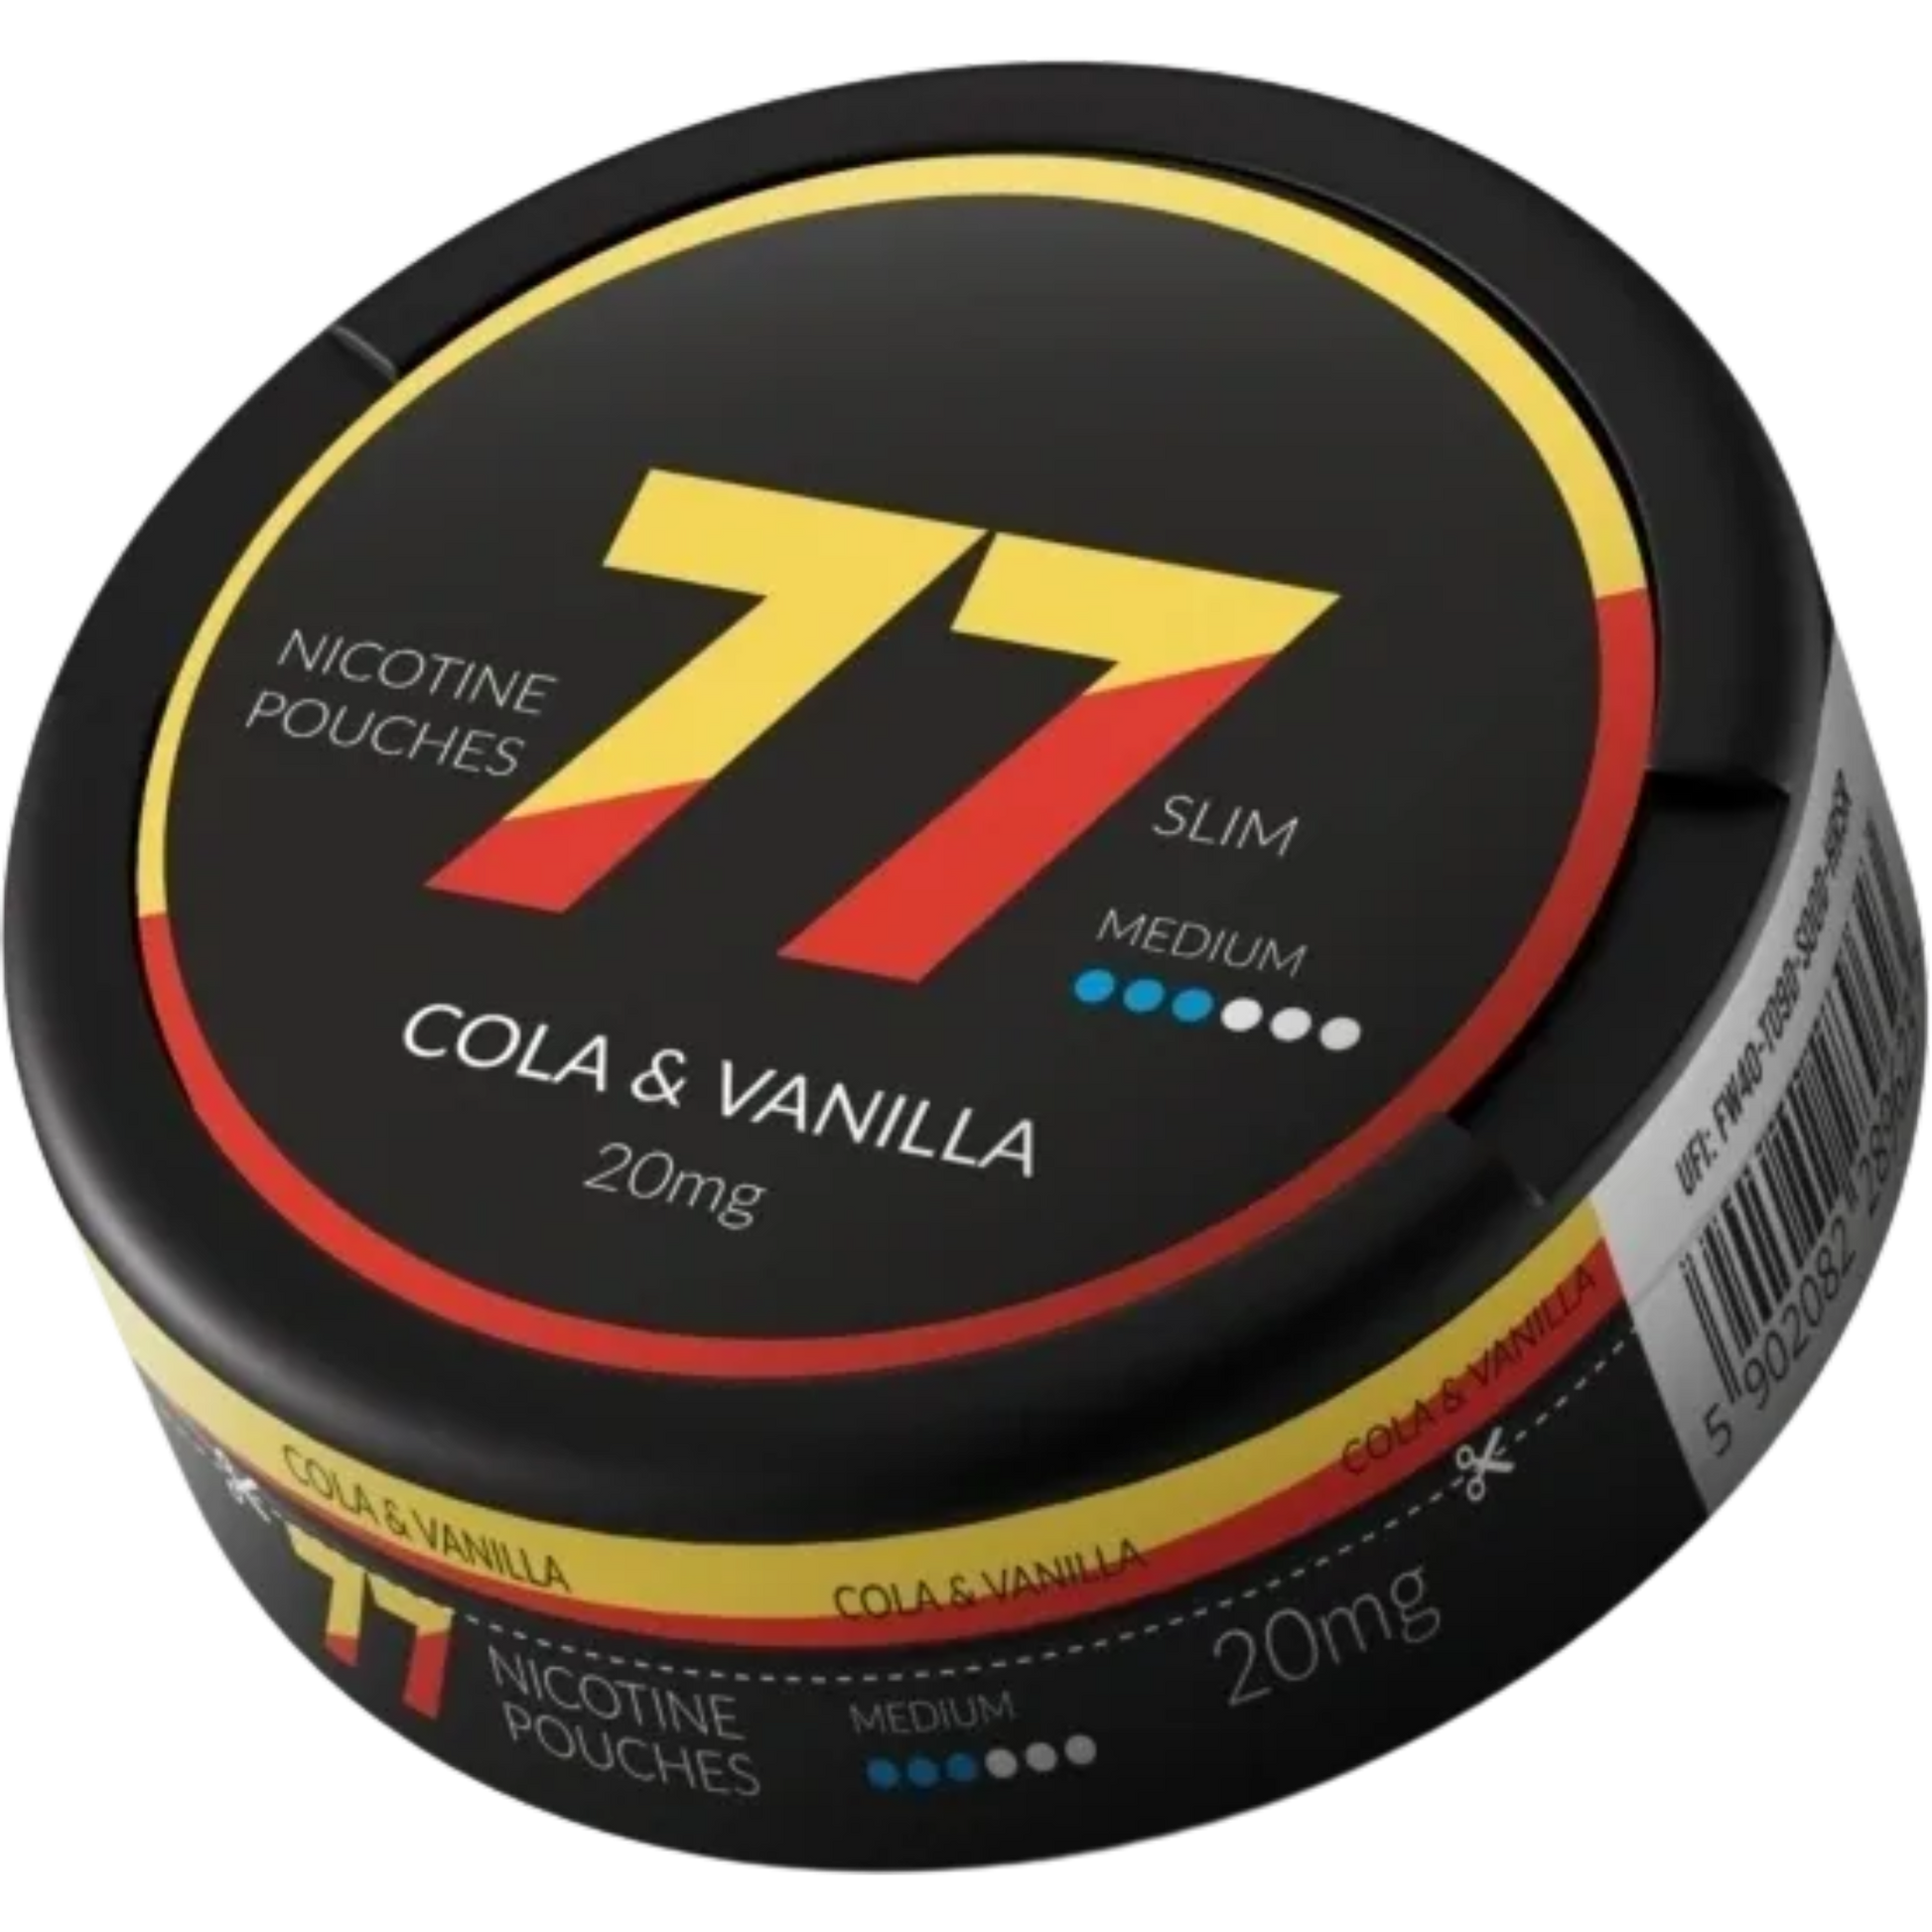 77 Cola & Vanilla - 20mg